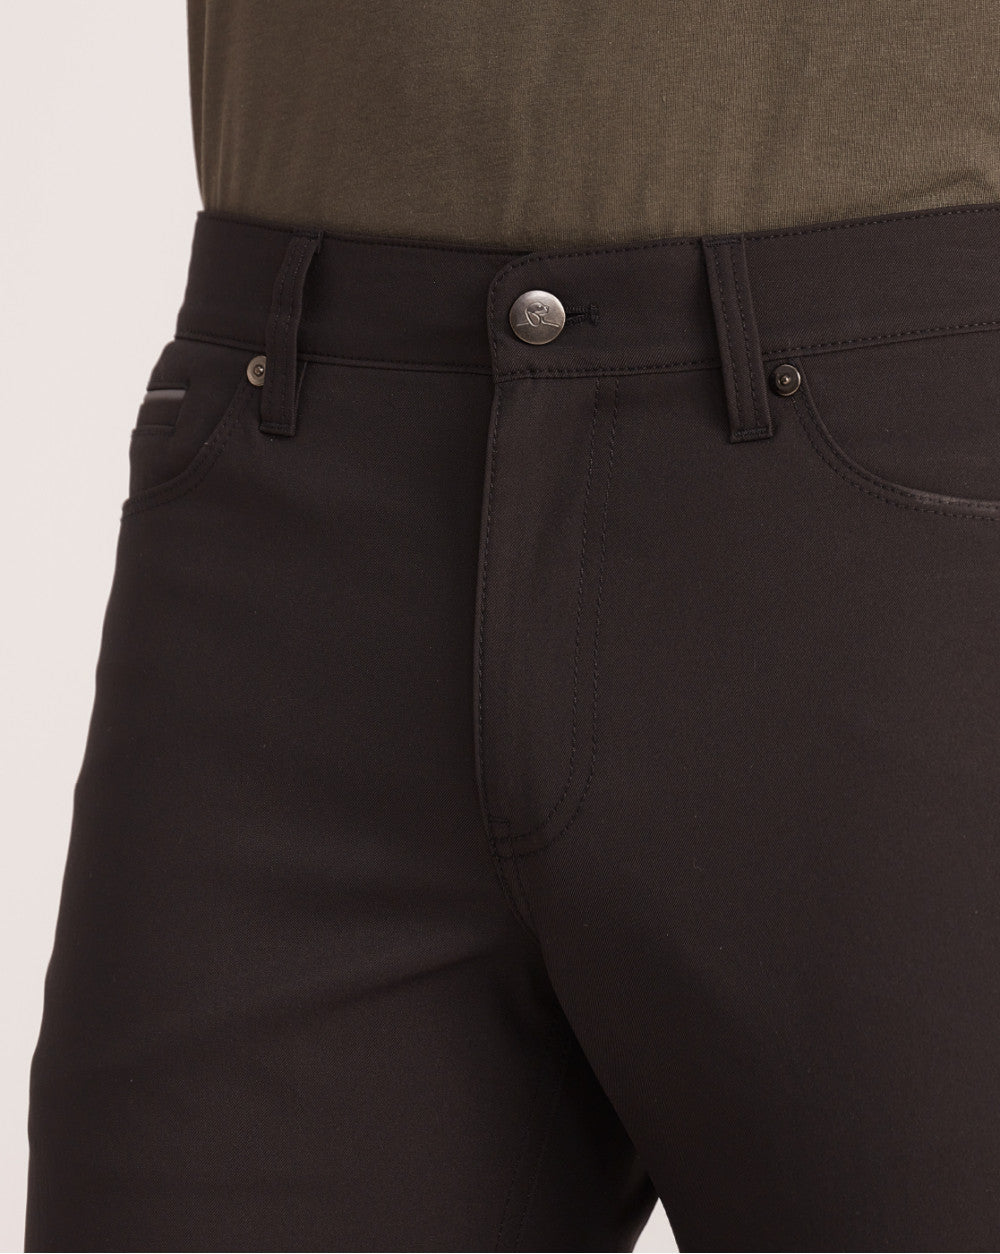 Slim Fit 5-Pocket Performance Pants - Black